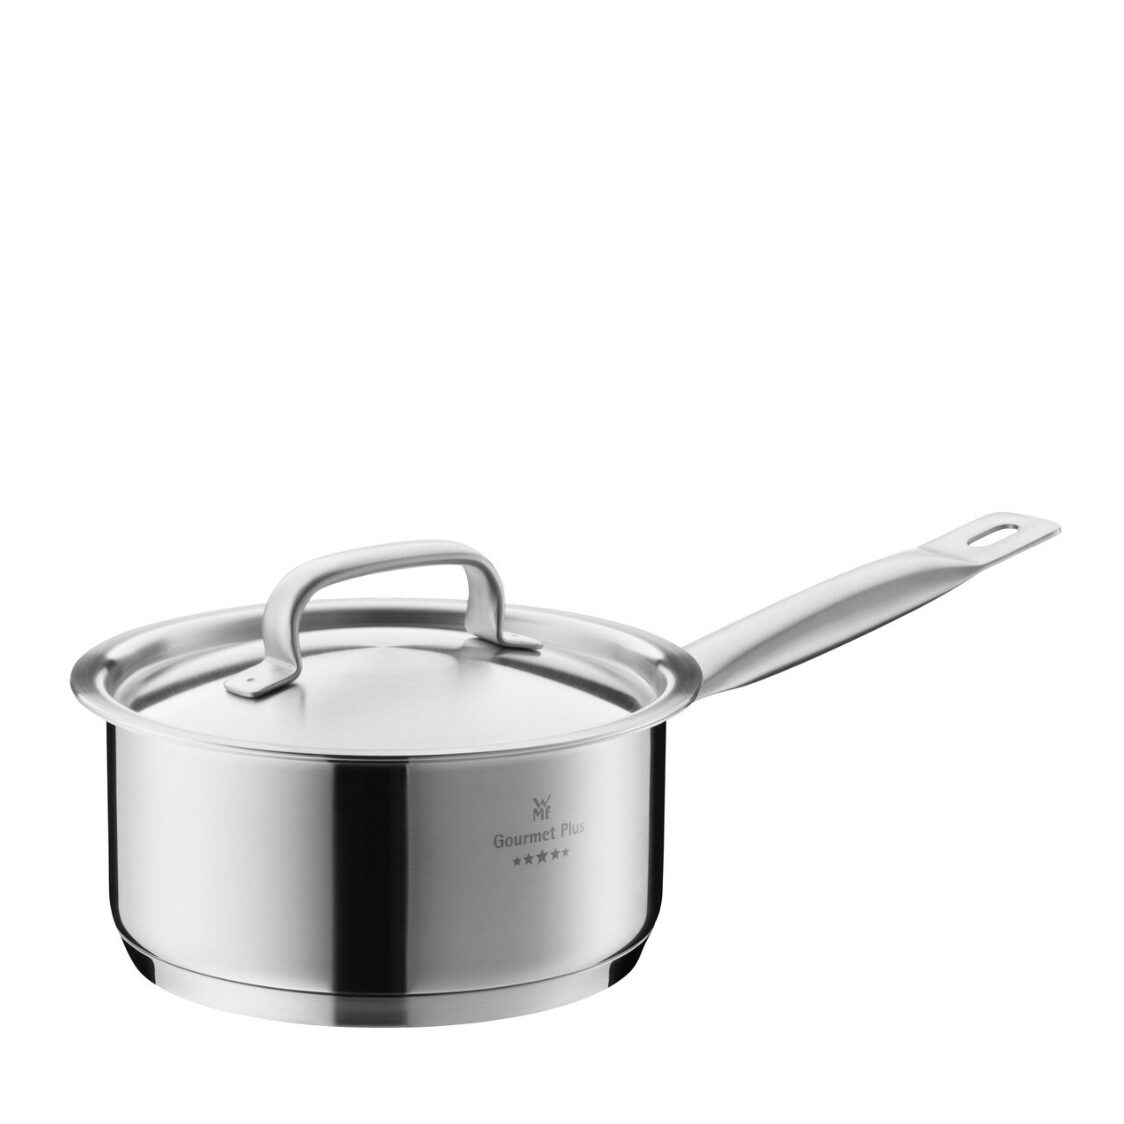 WMF Gourmet Plus Saucepan with lid, 20cm 0726166030